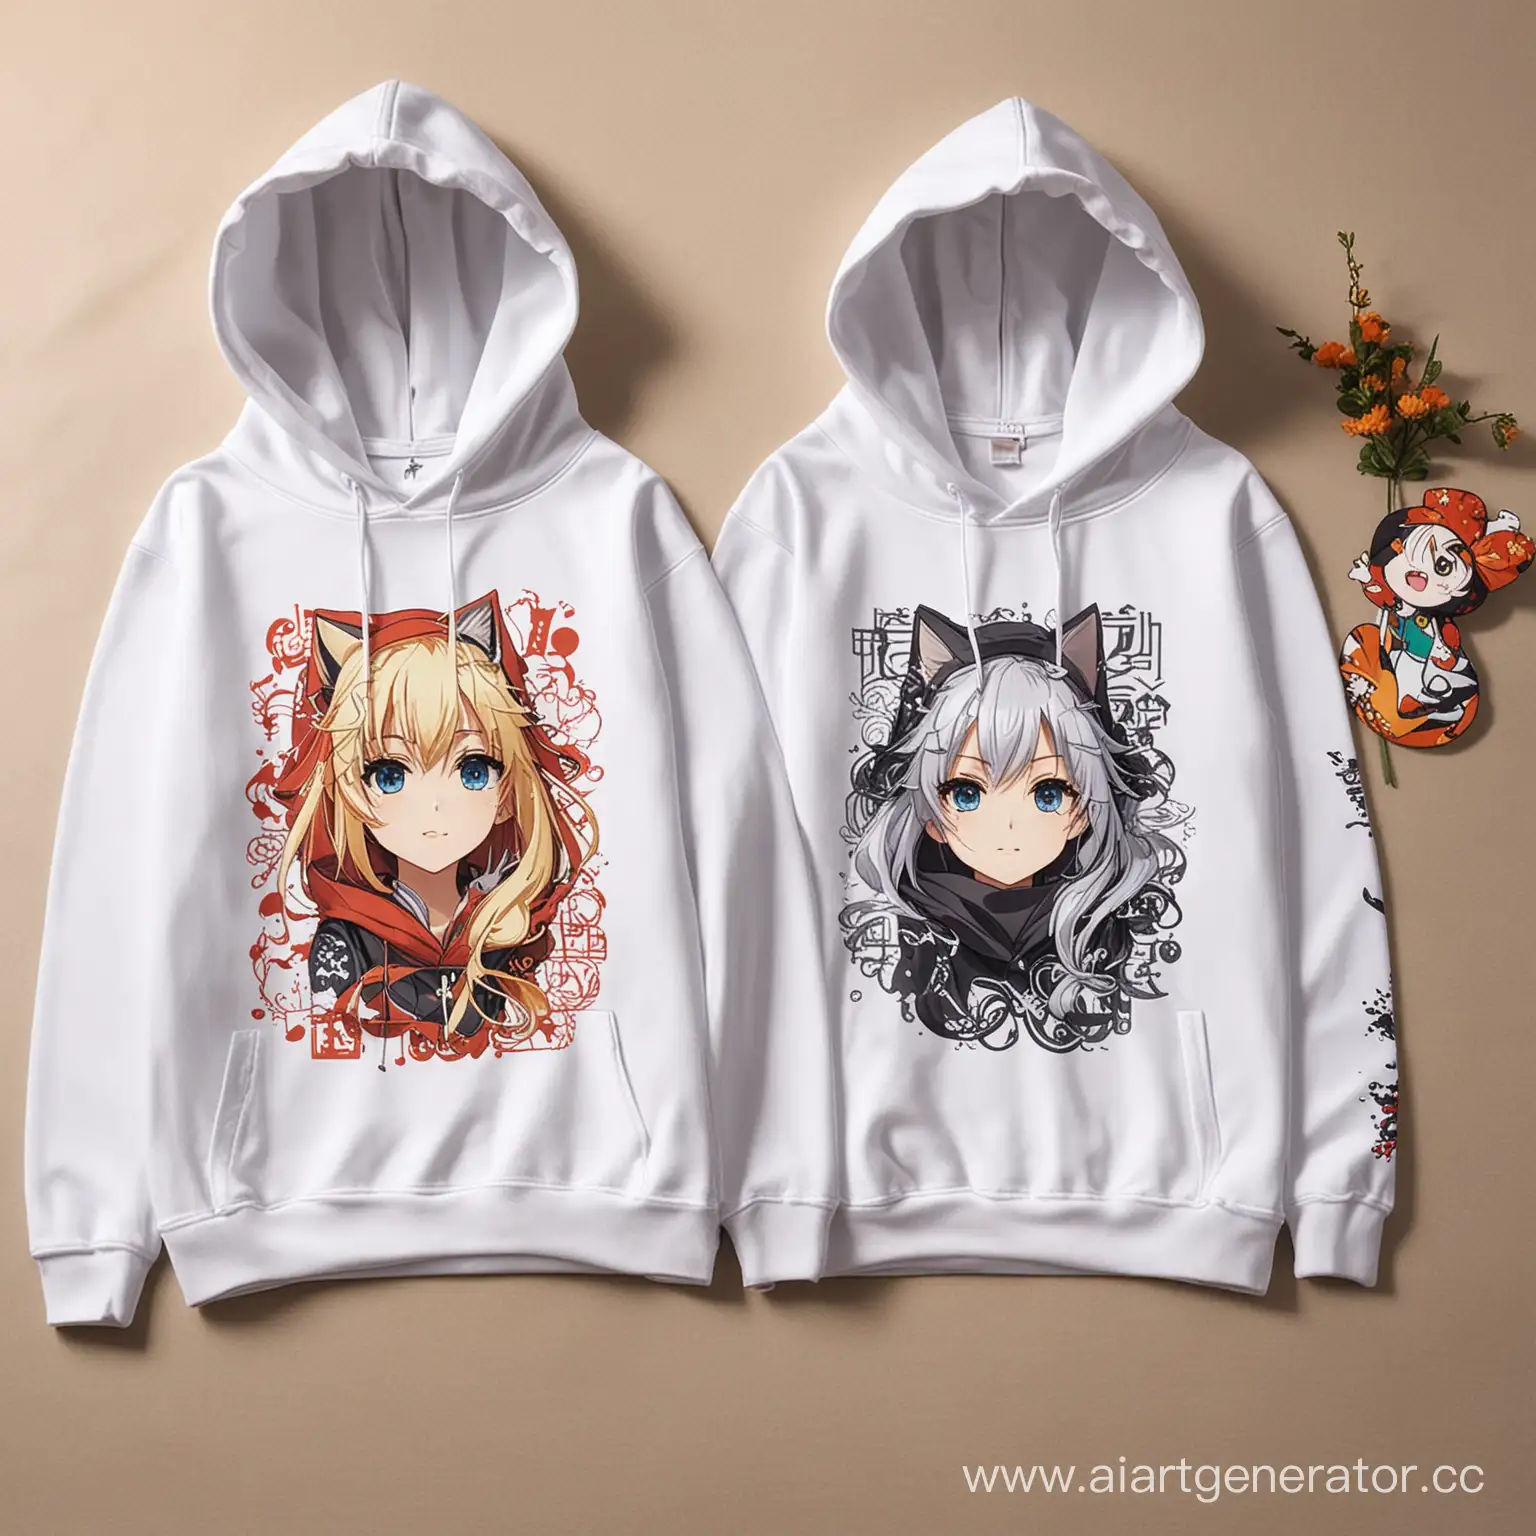 Anime-Print-Hoodies-on-Decorative-Template